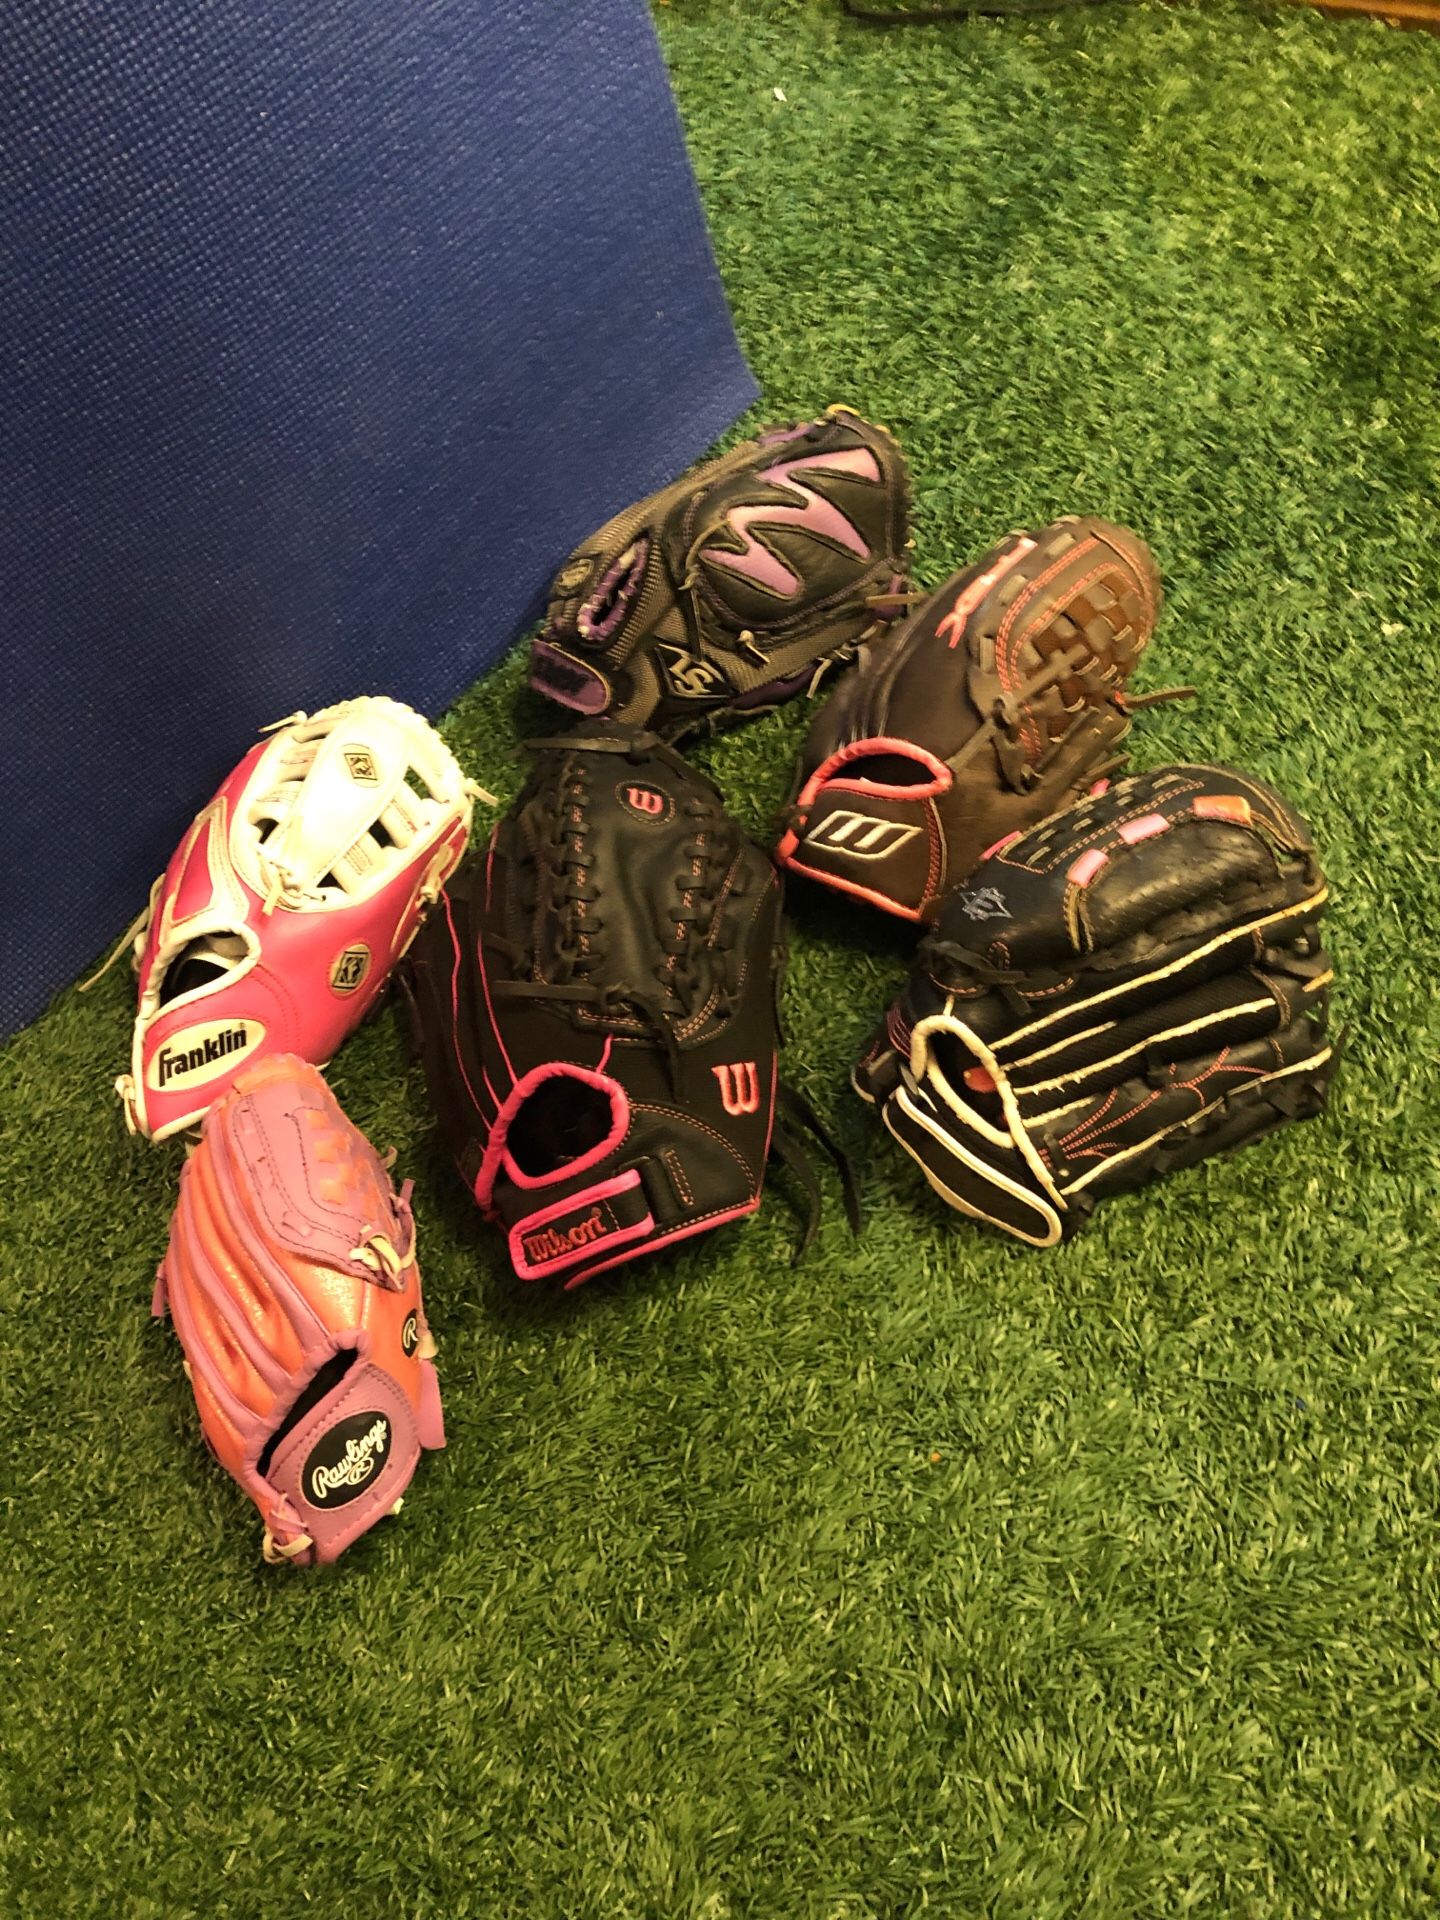 Softball/Fastpitch gloves Wilson, Rawlings, Franklin, Louisville Slugger, worth